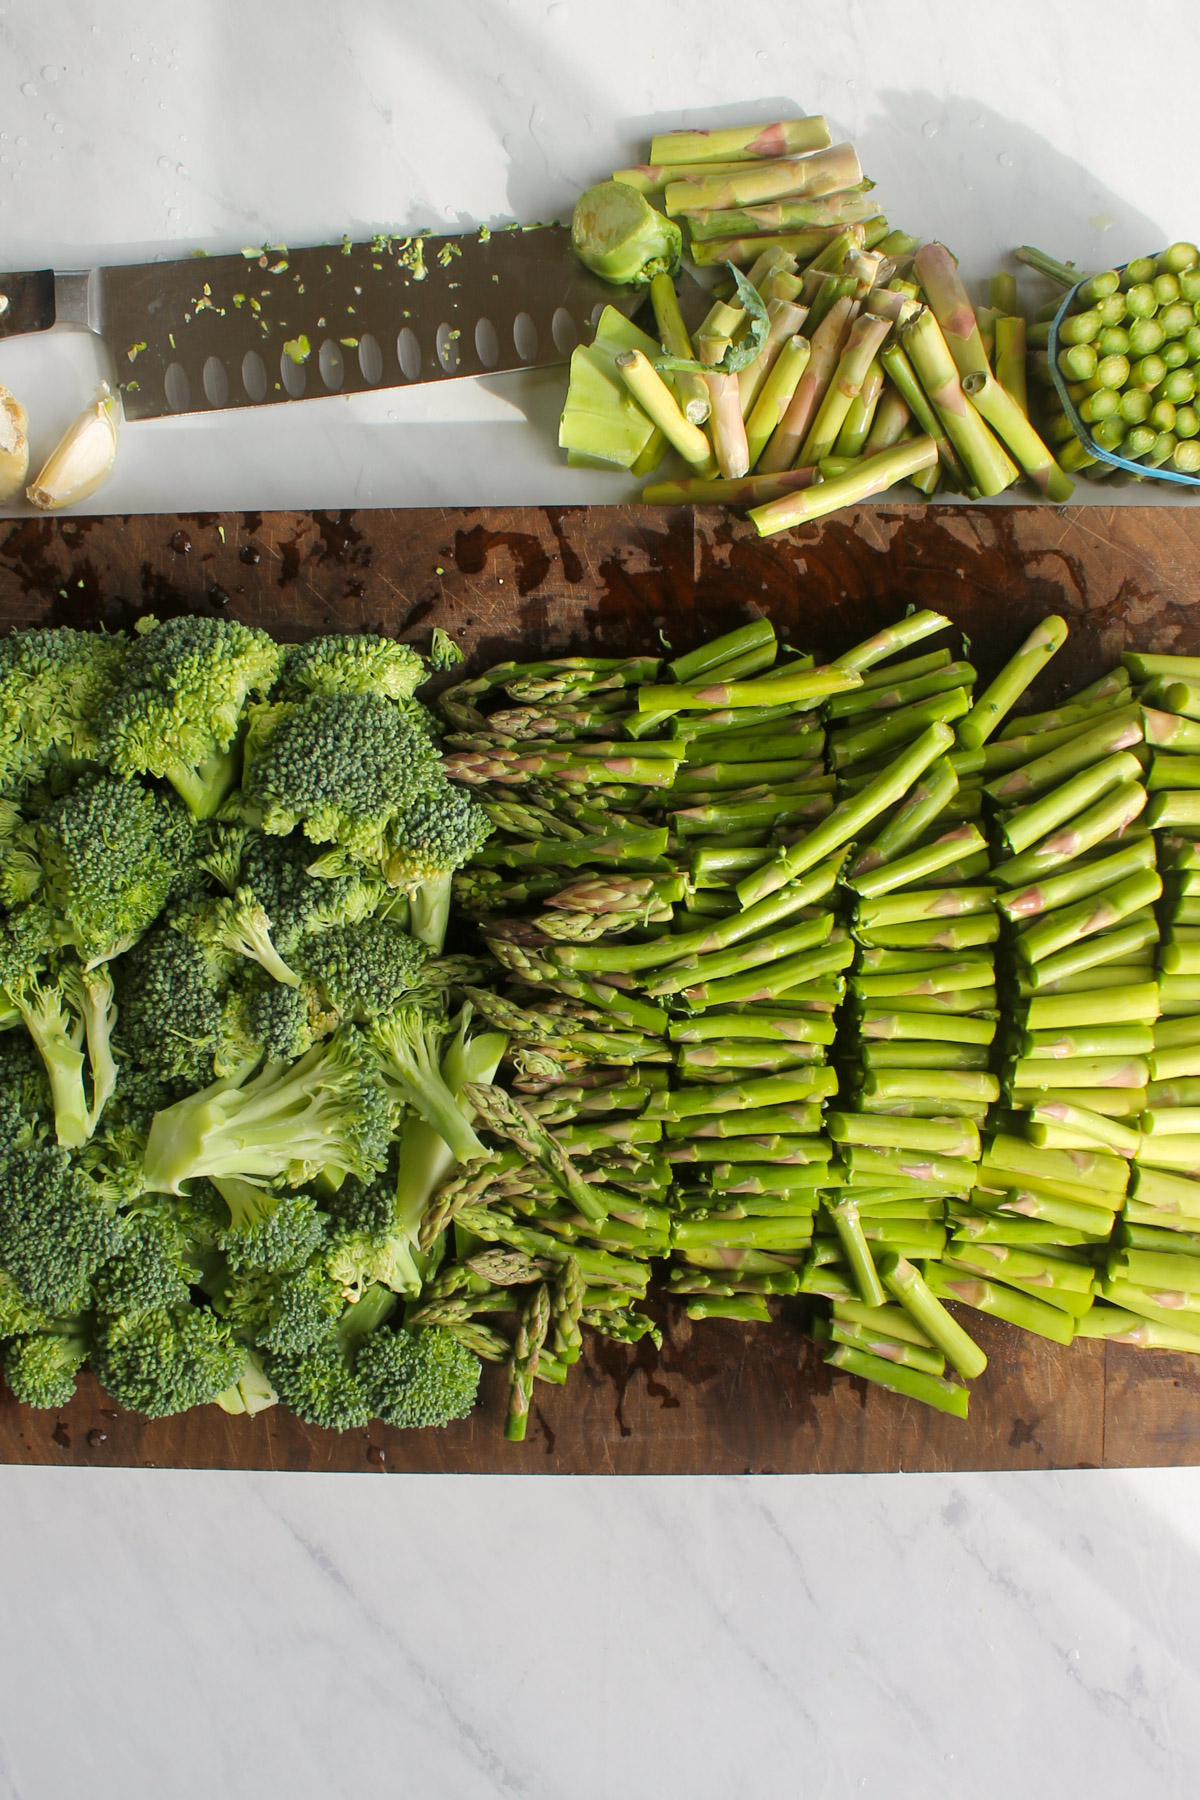 Chopped broccoli and asparagus on a cutting board.